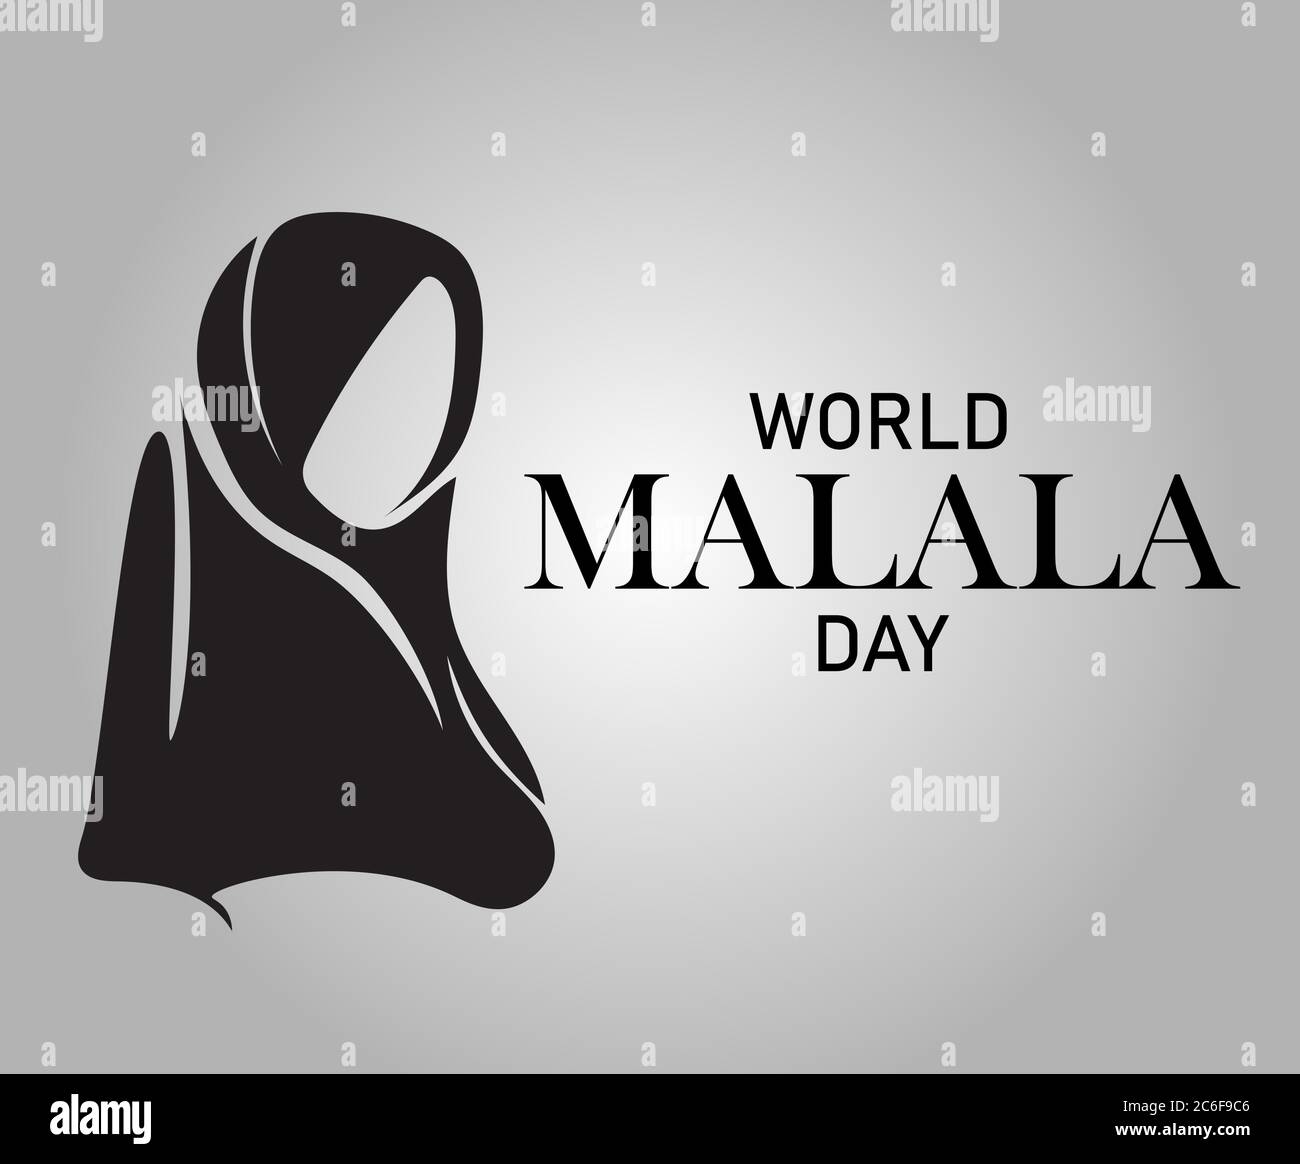 World Malala Day, 12th July, Malala Yousafzai, black and white background, poster, illustration vector Stock Vector